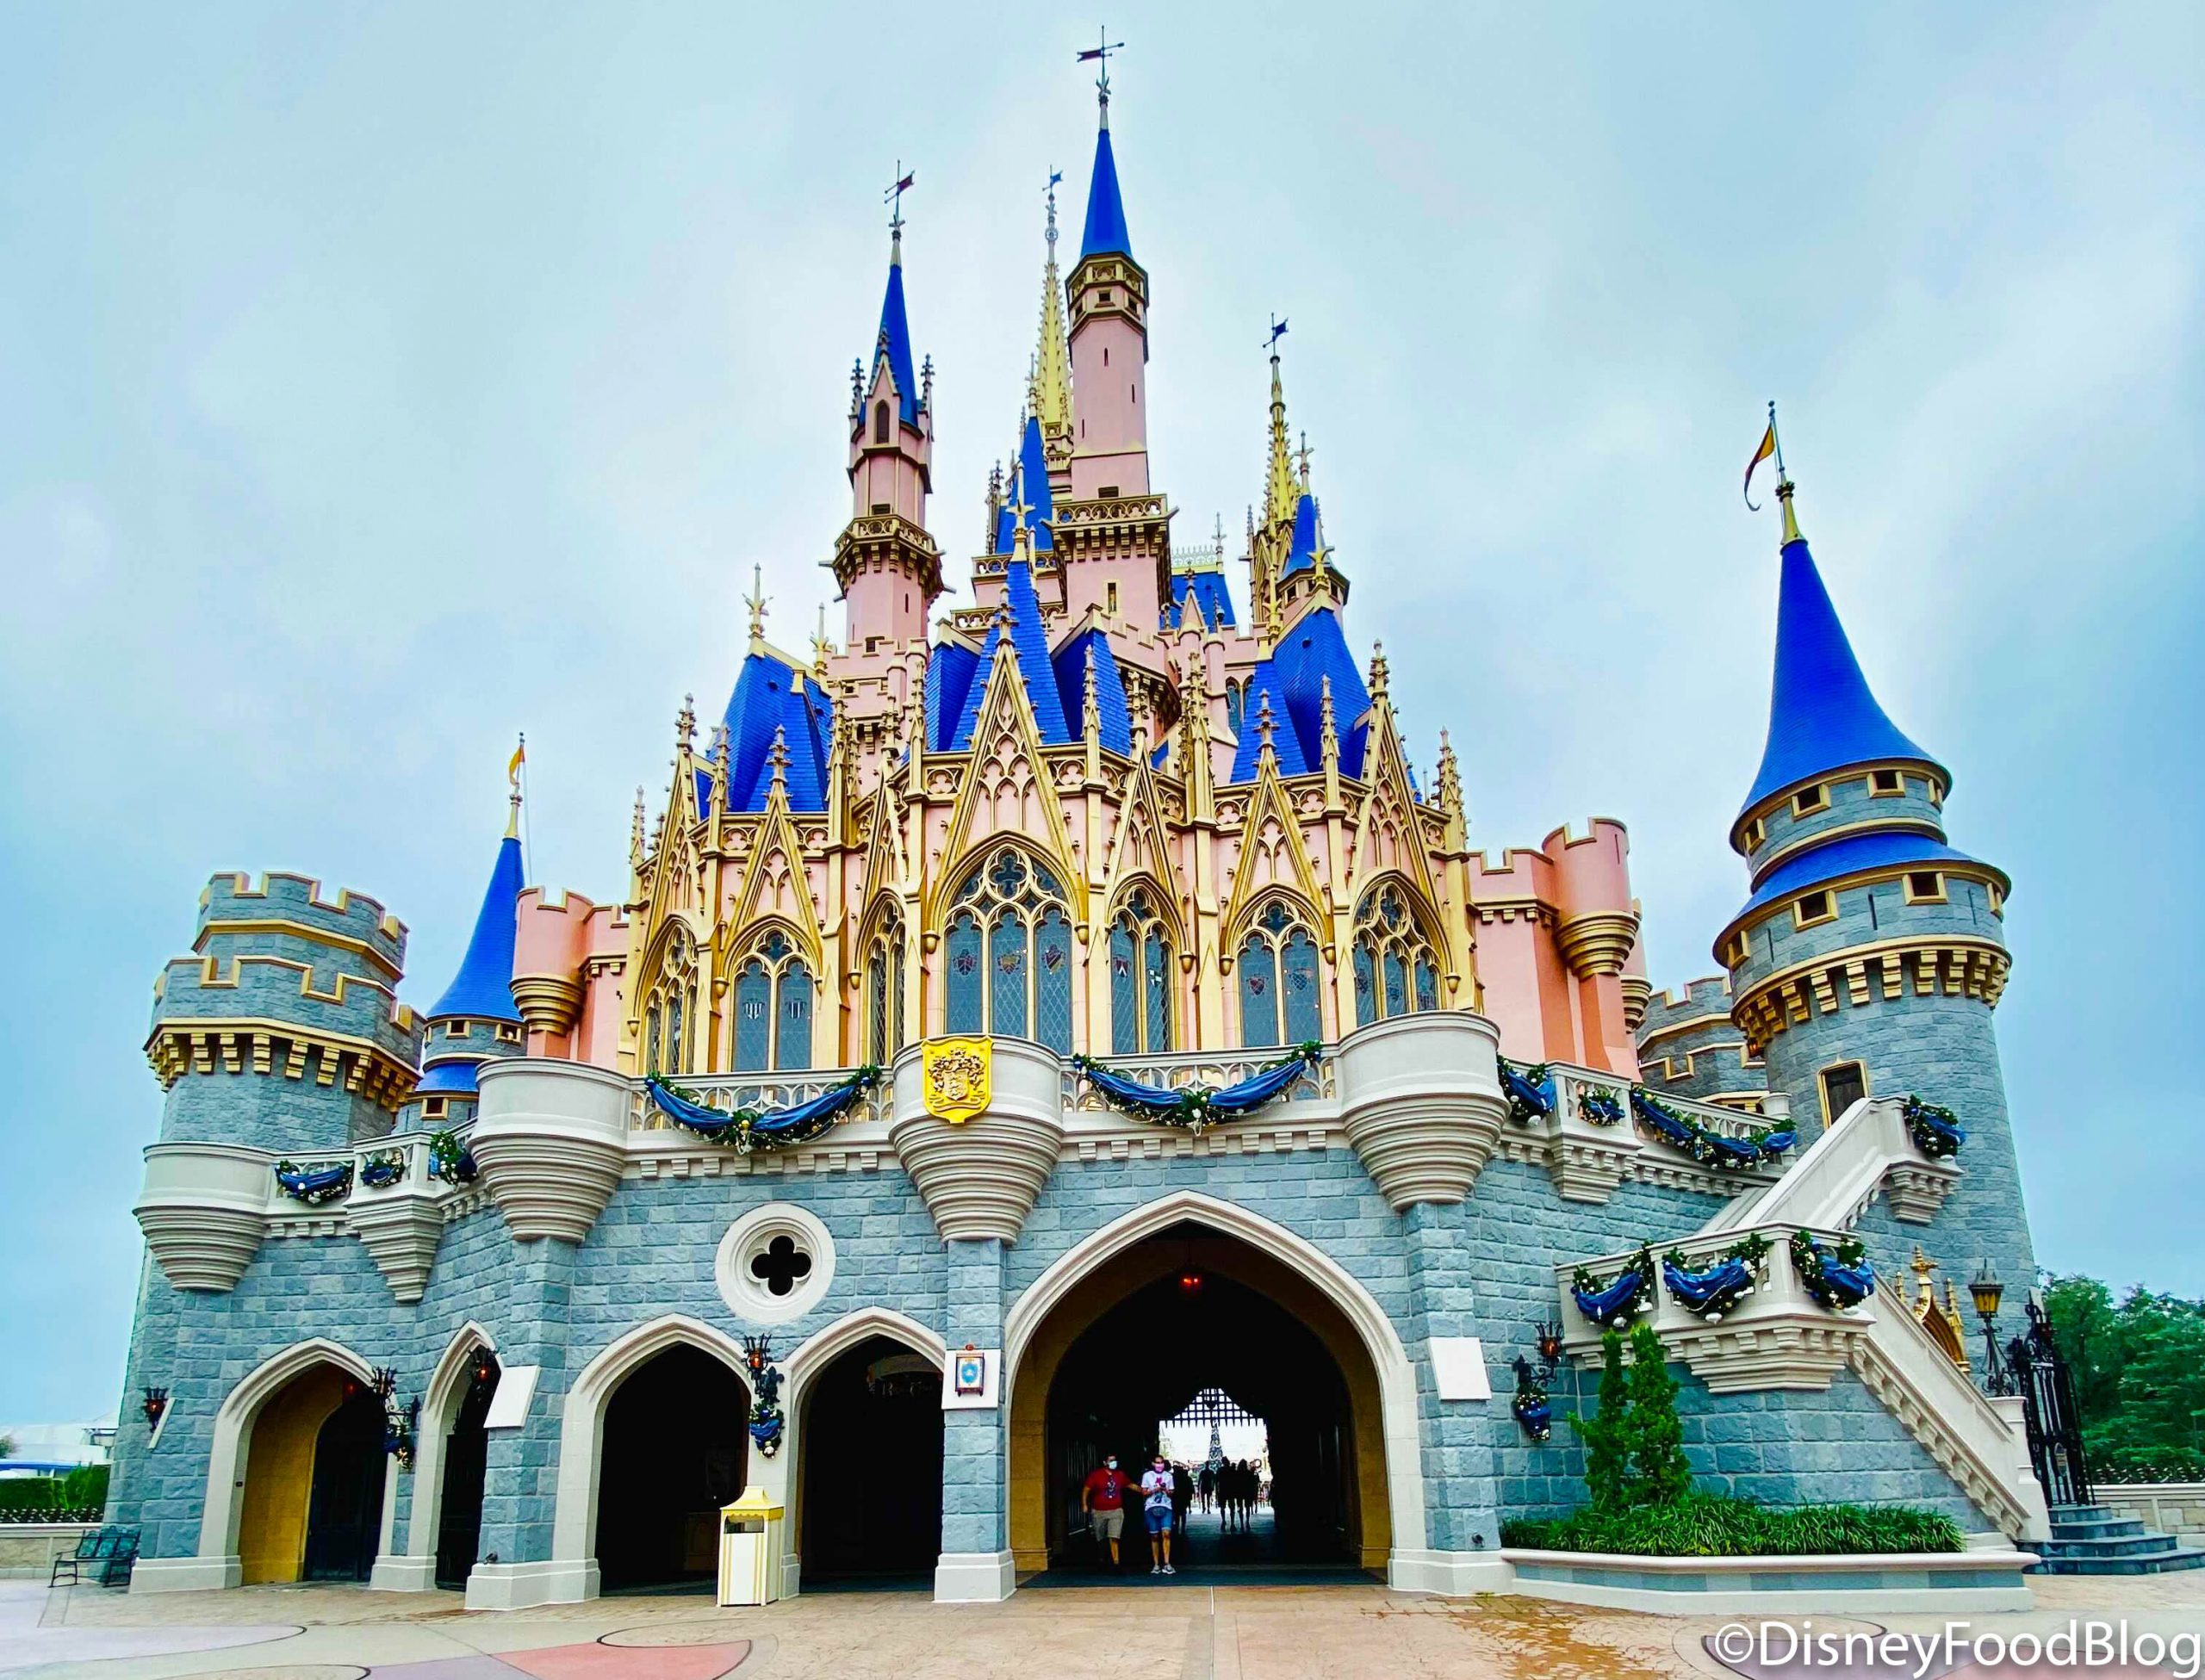 admission cost to get into magic kingdom, disney world orlando $3,363.28-$189.58=